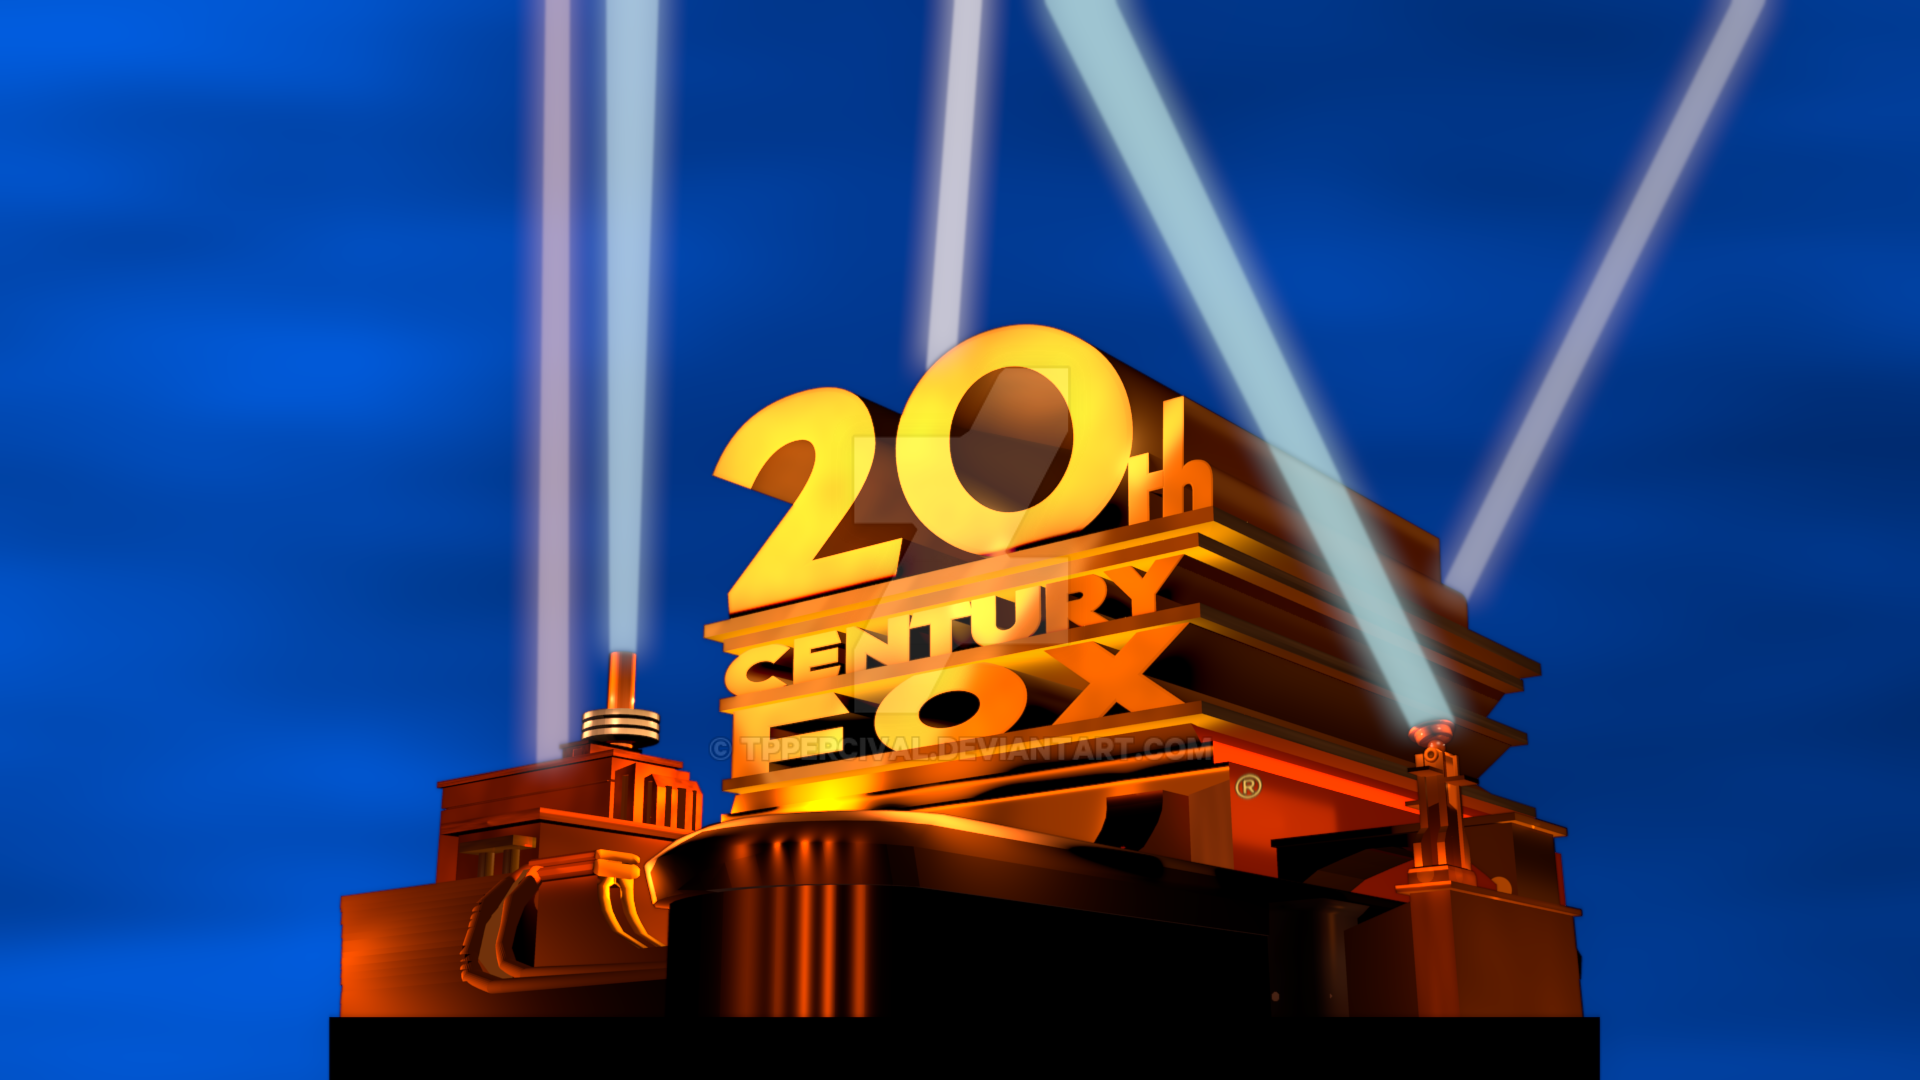 Century Fox 20th зажигалка. 20th Century Fox 1993. MLG 20th Century Fox. 20th Century Fox Television 2001. Включи видео представляет